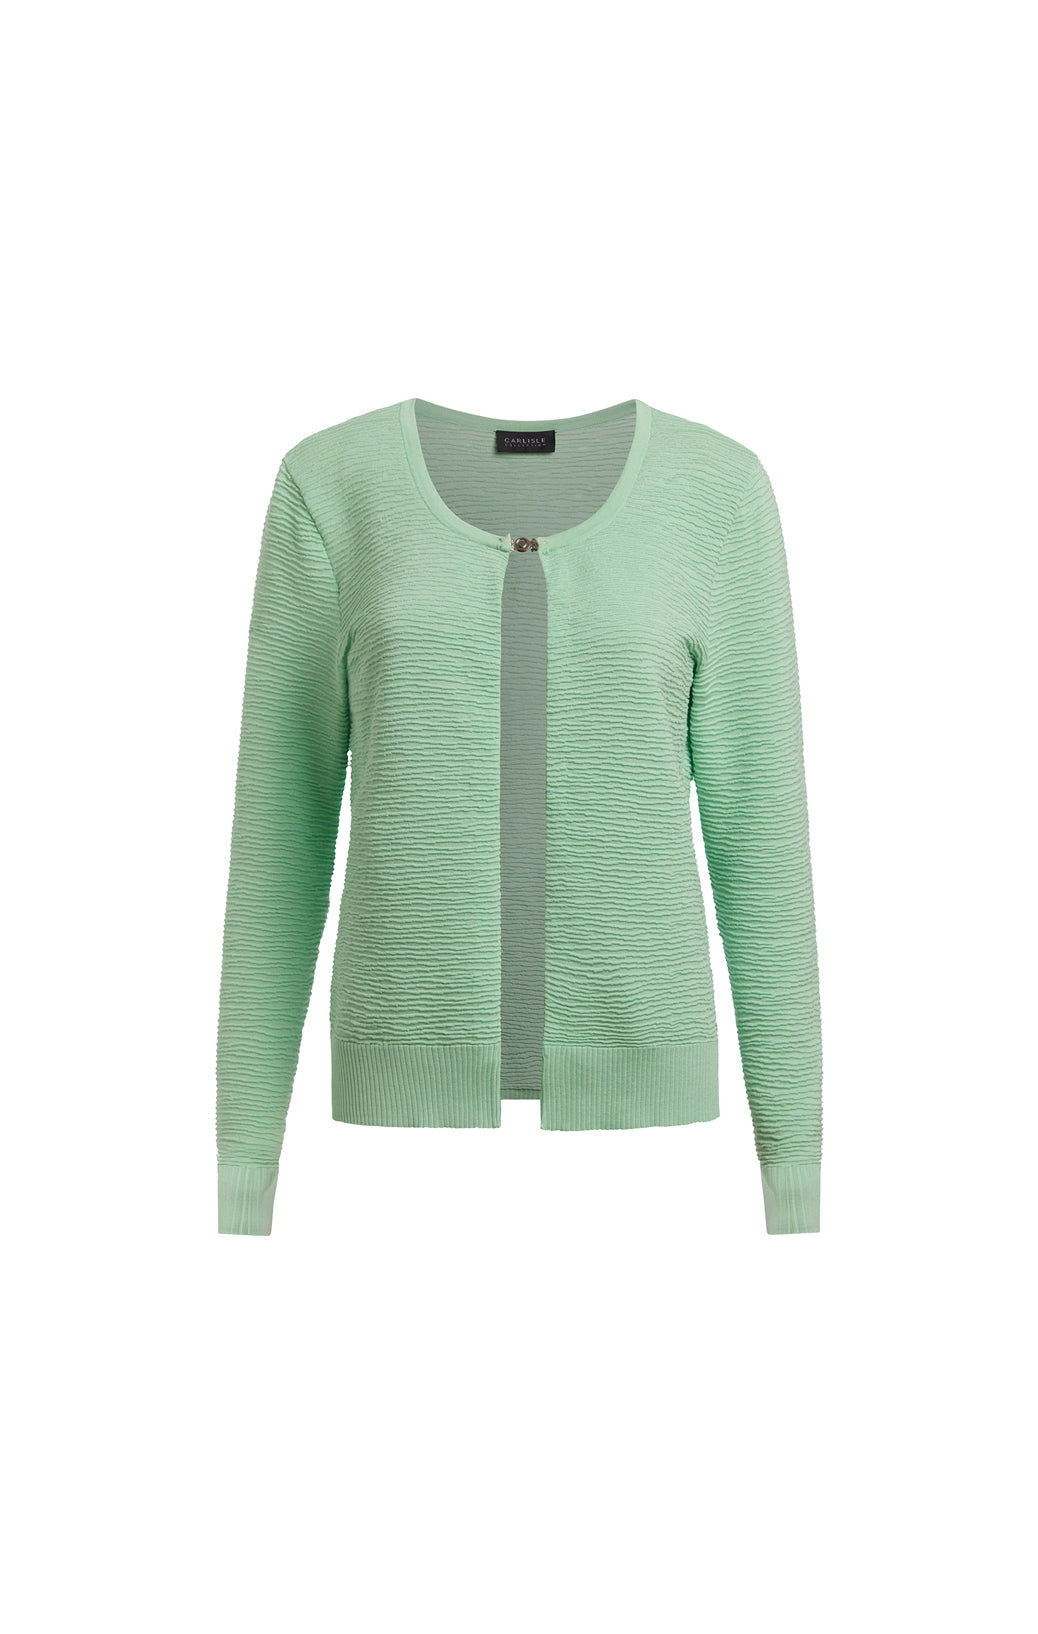 Elysian-Shell - Ottoman-Look Silk Sweater - IMAGE